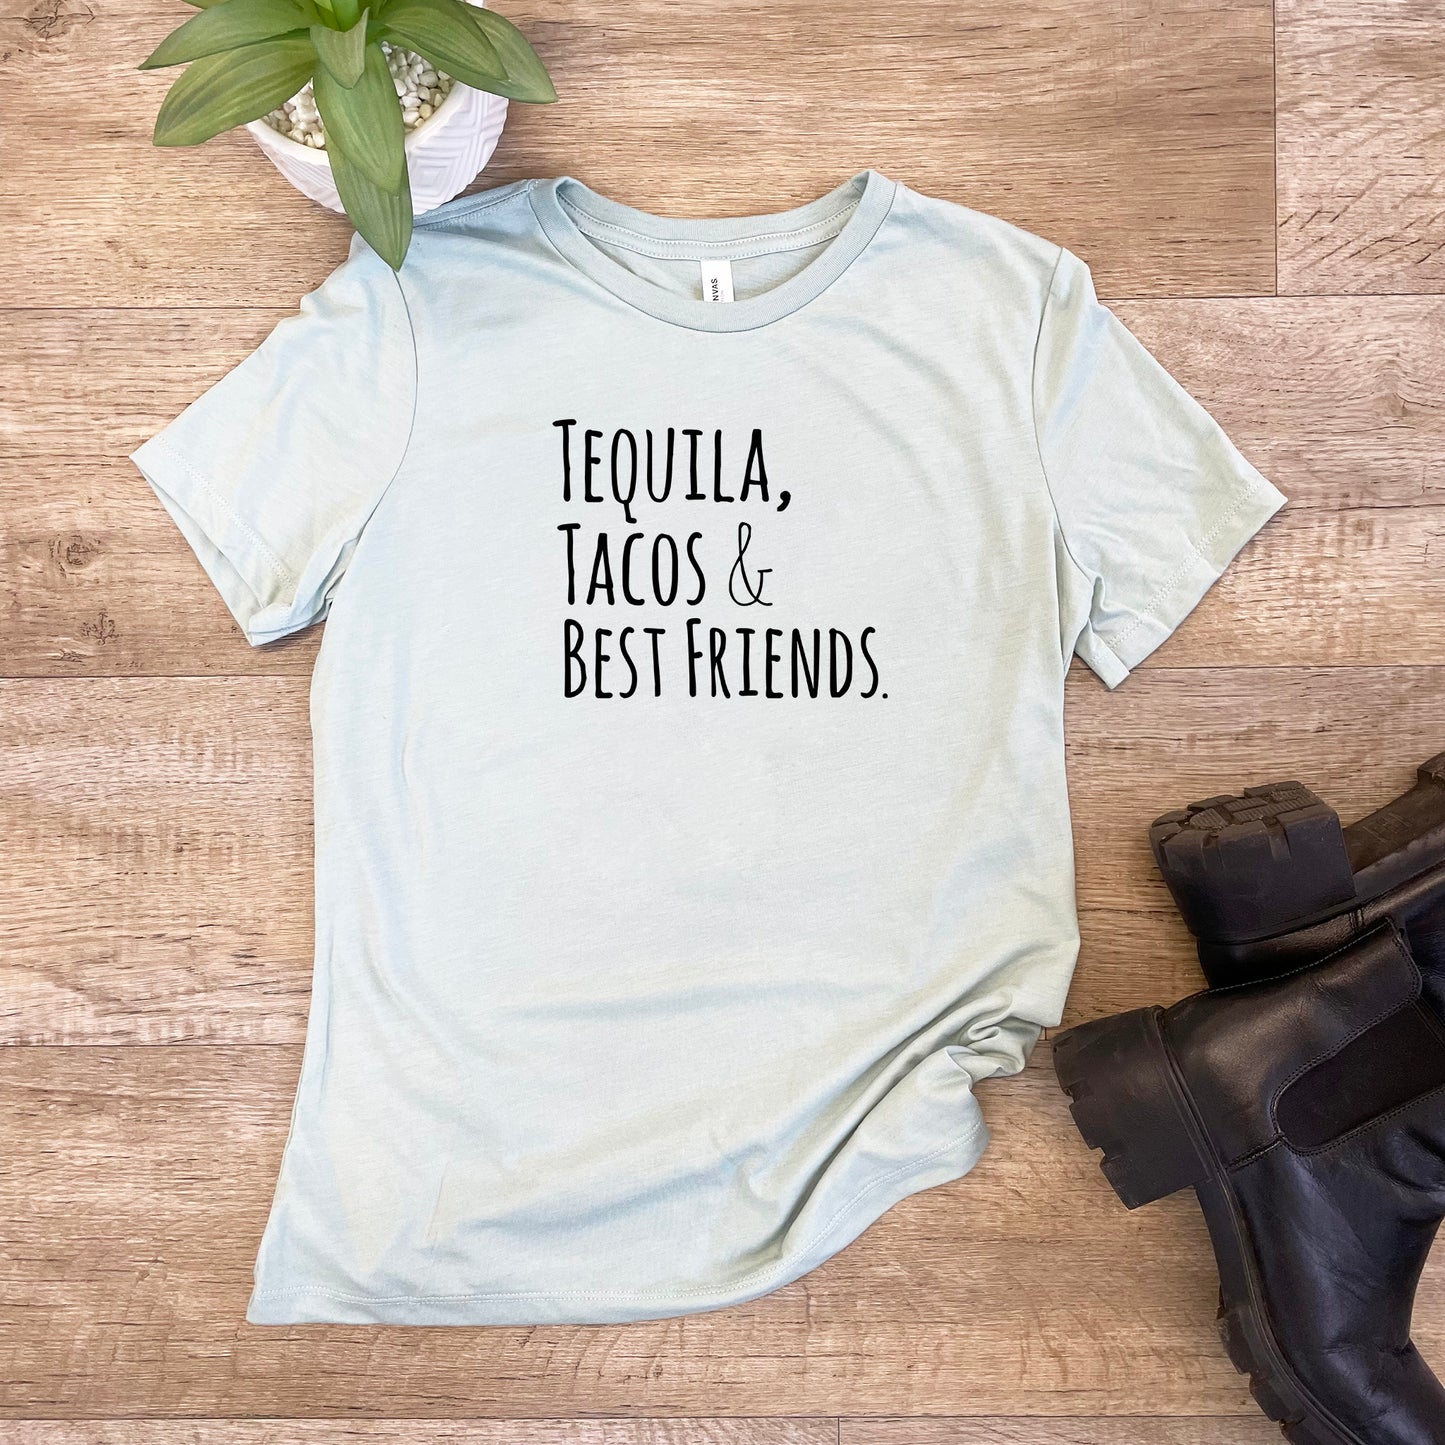 Tequila, Tacos, & Best Friends - Women's Crew Tee - Olive or Dusty Blue